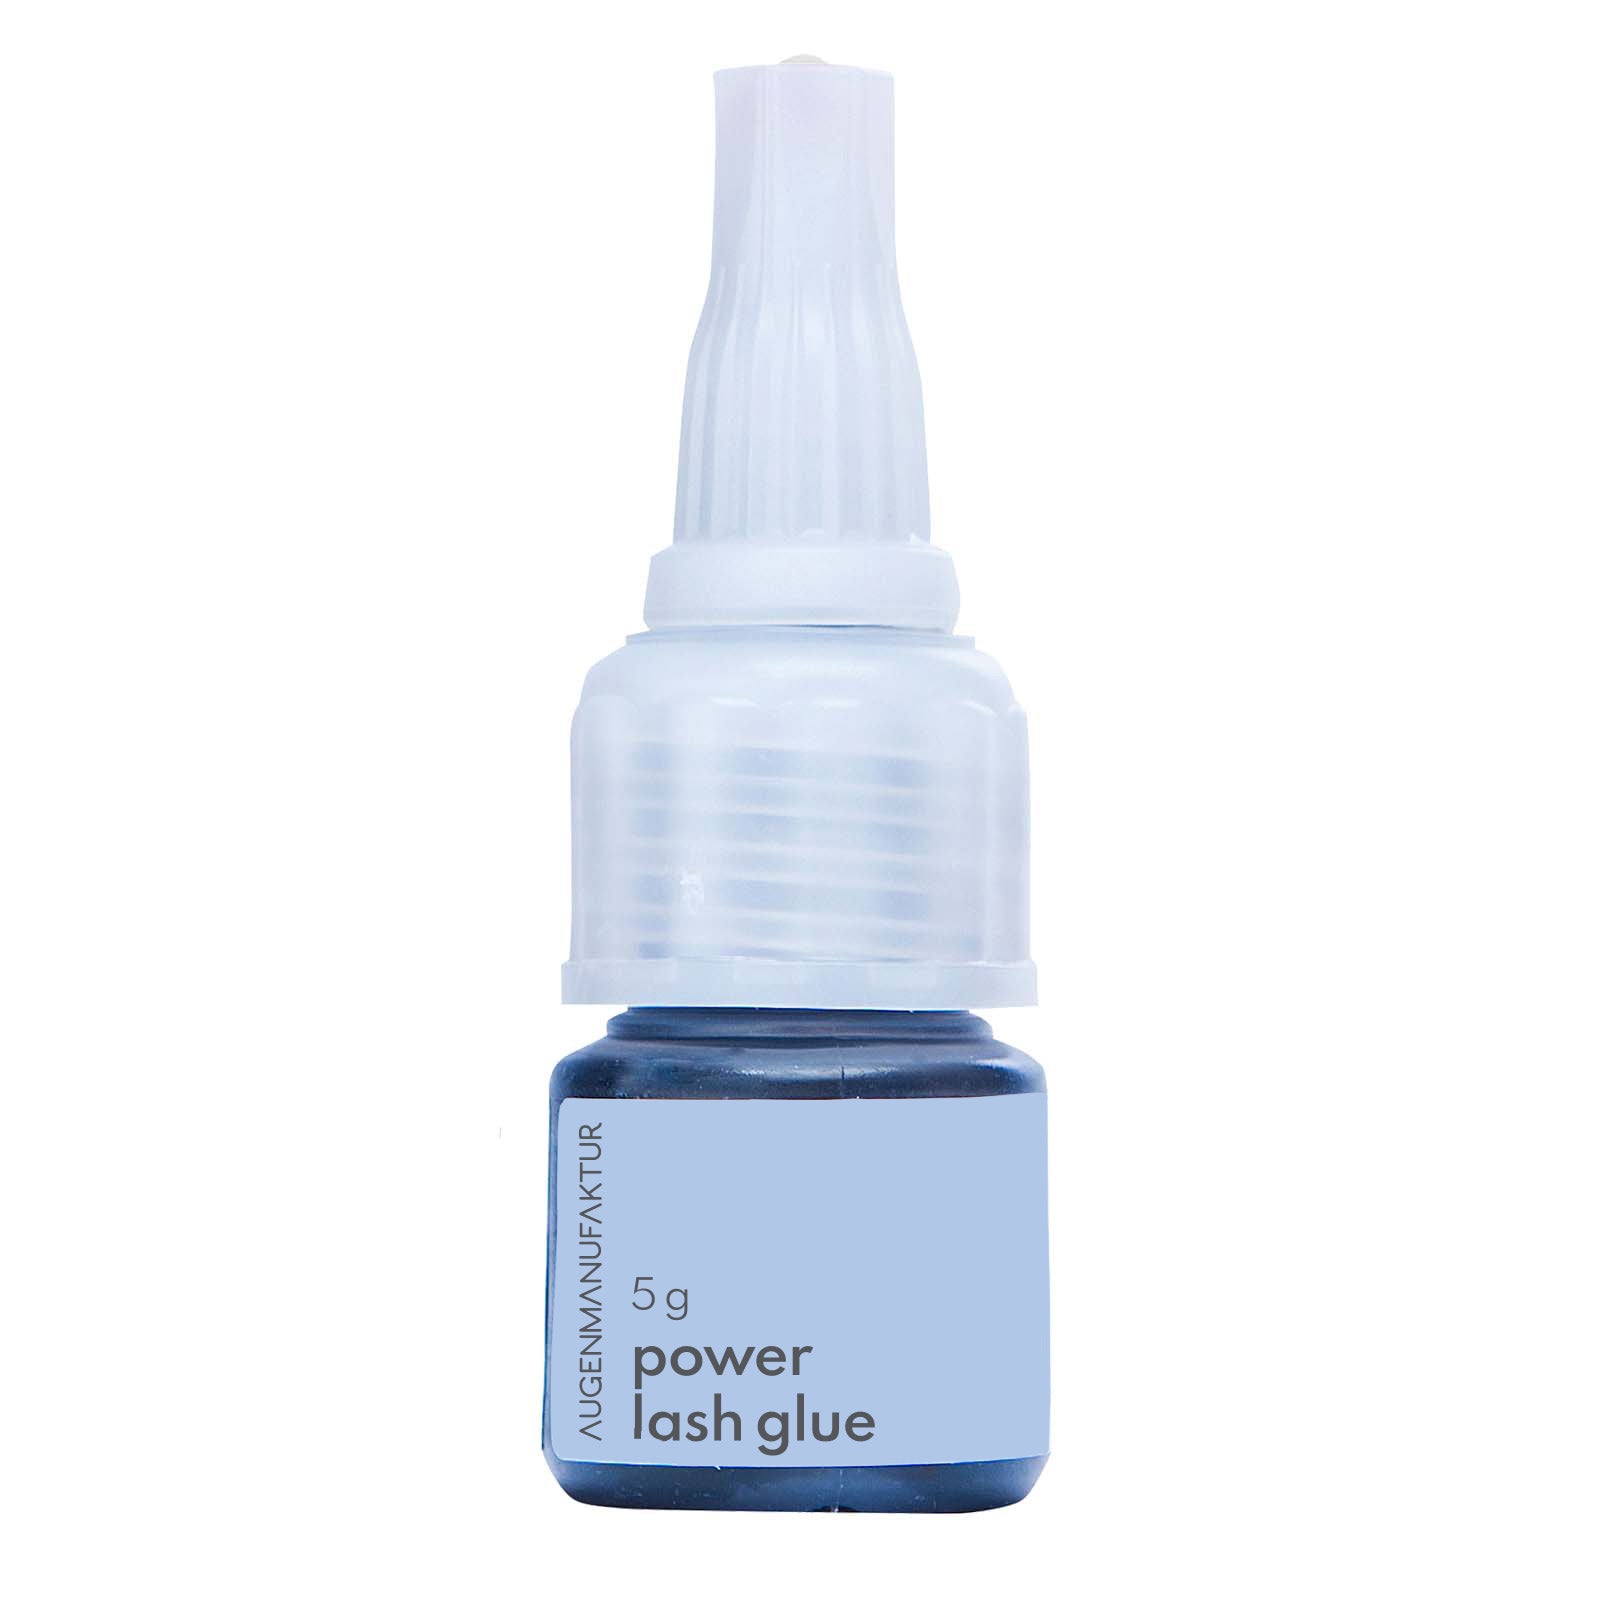 Power Lash Glue